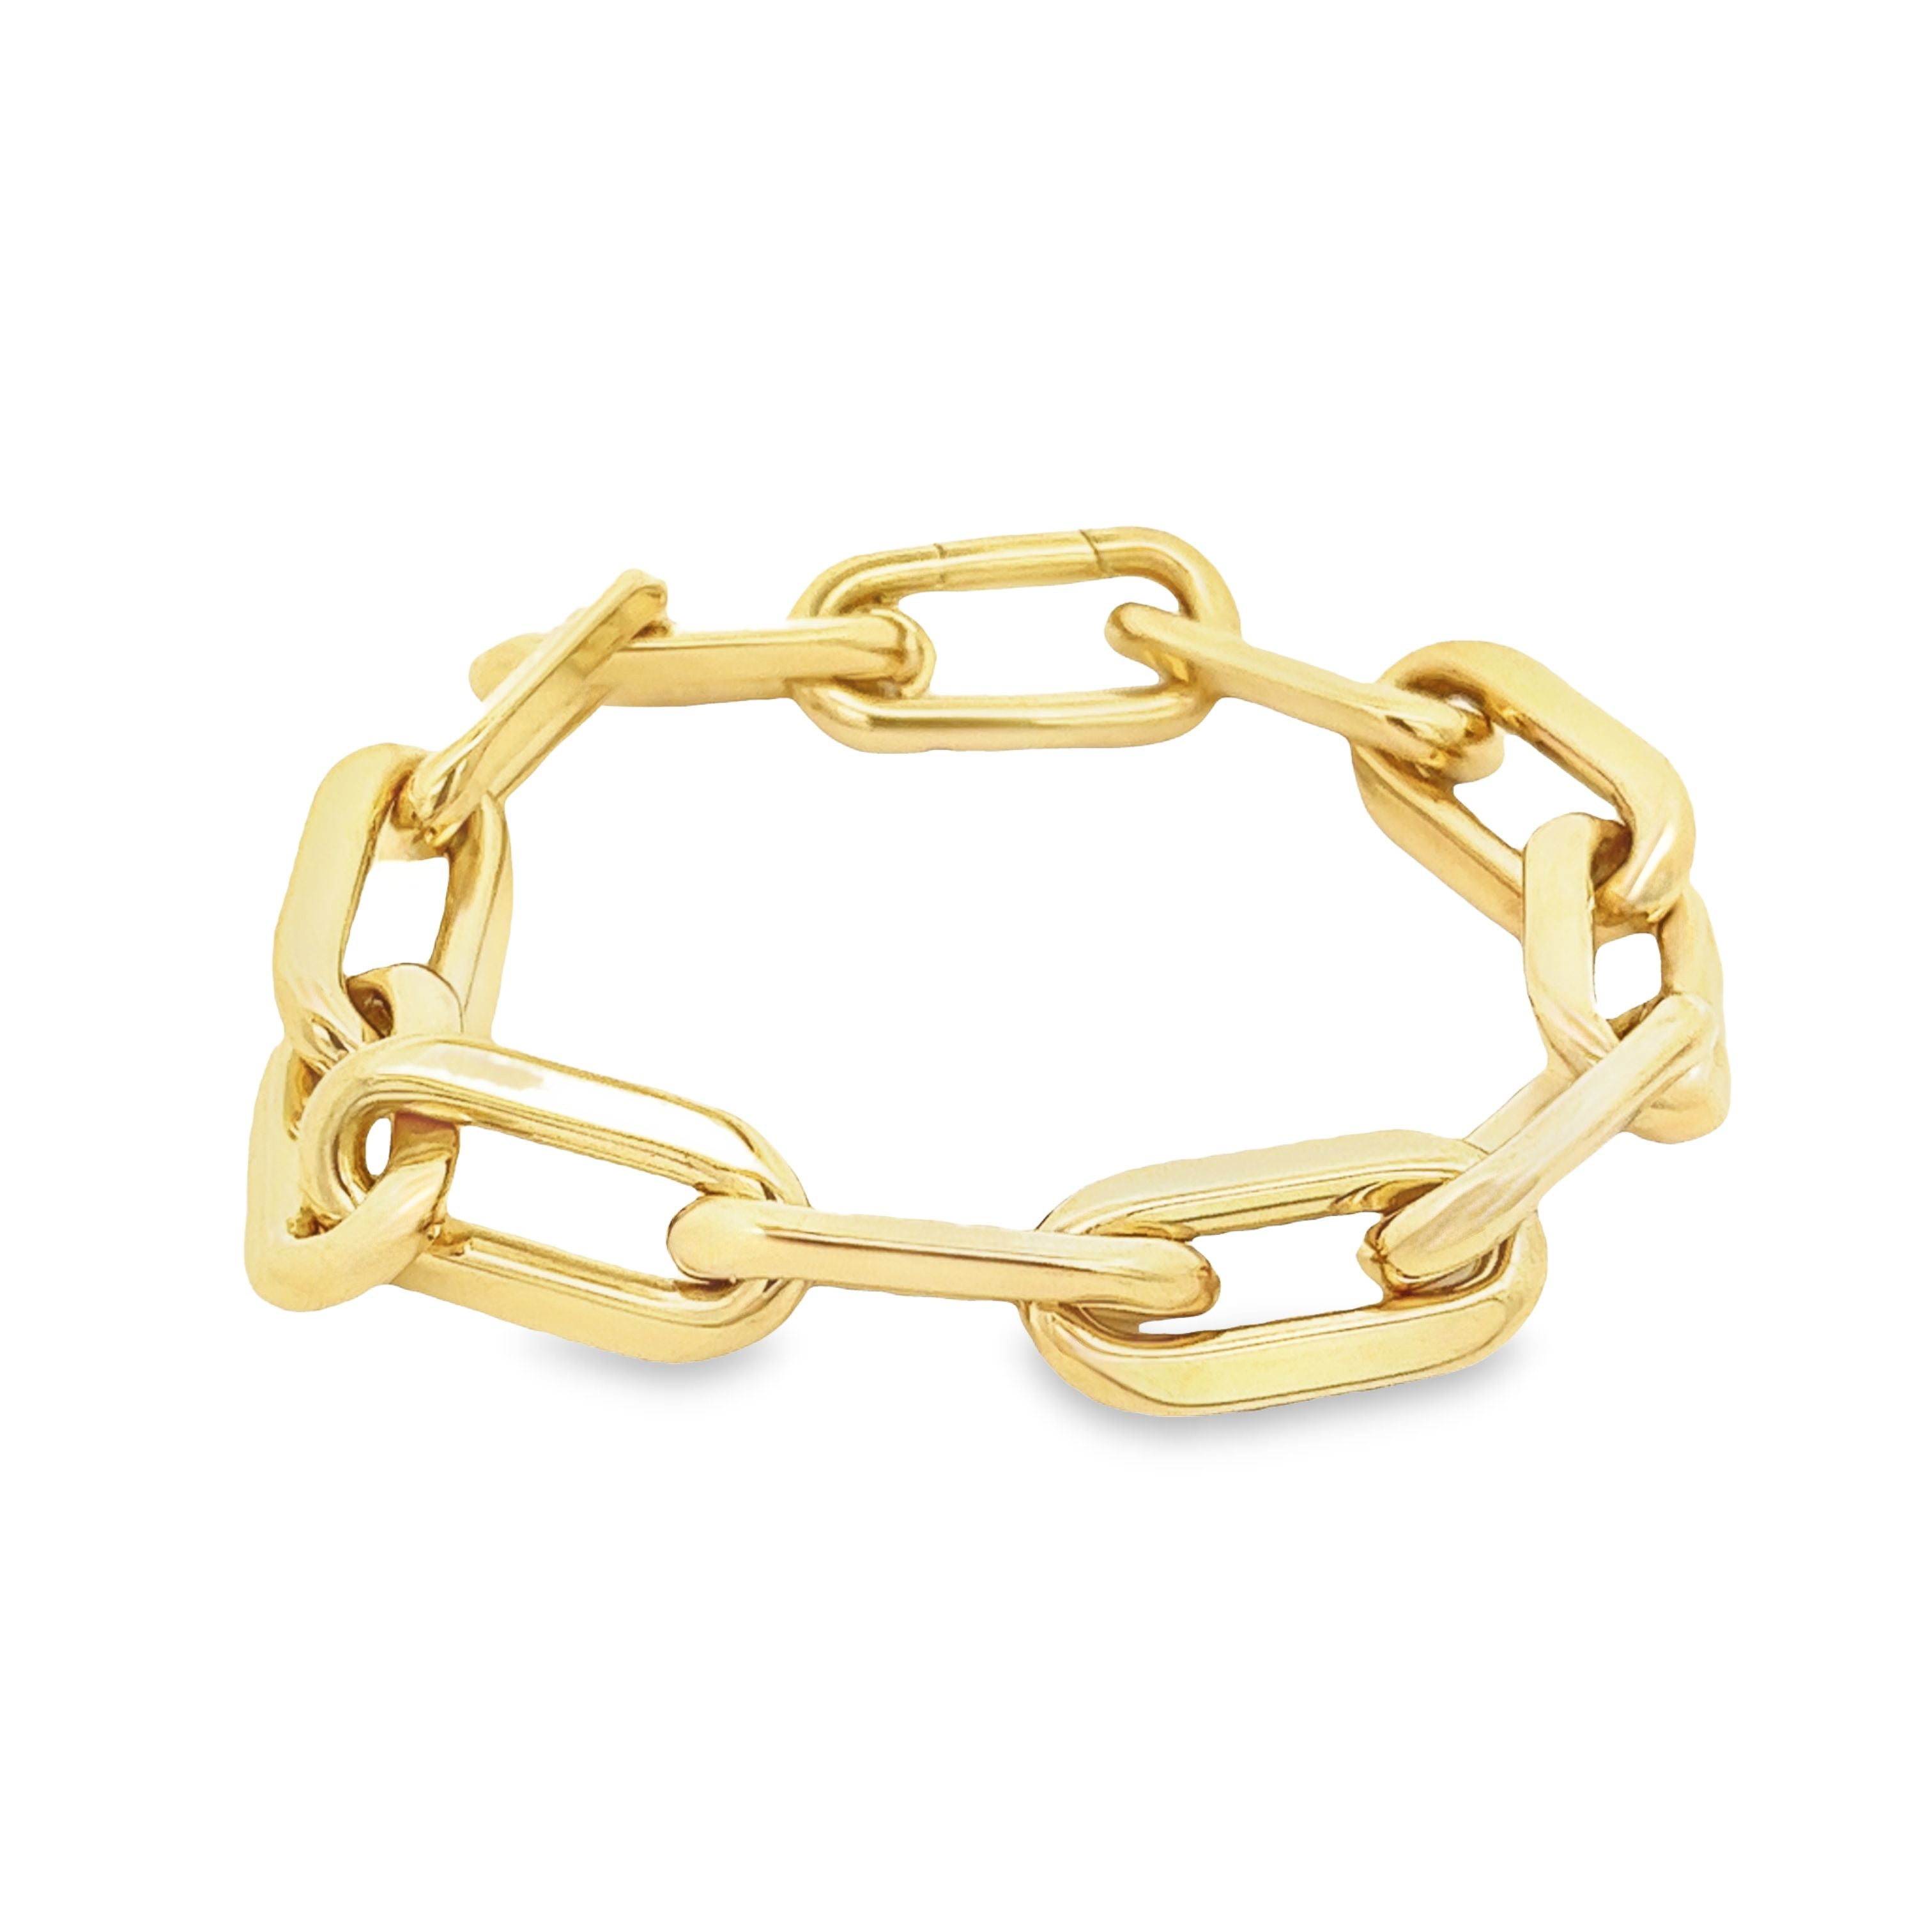 Roberto Coin Gold Bracelet 001-440-00514